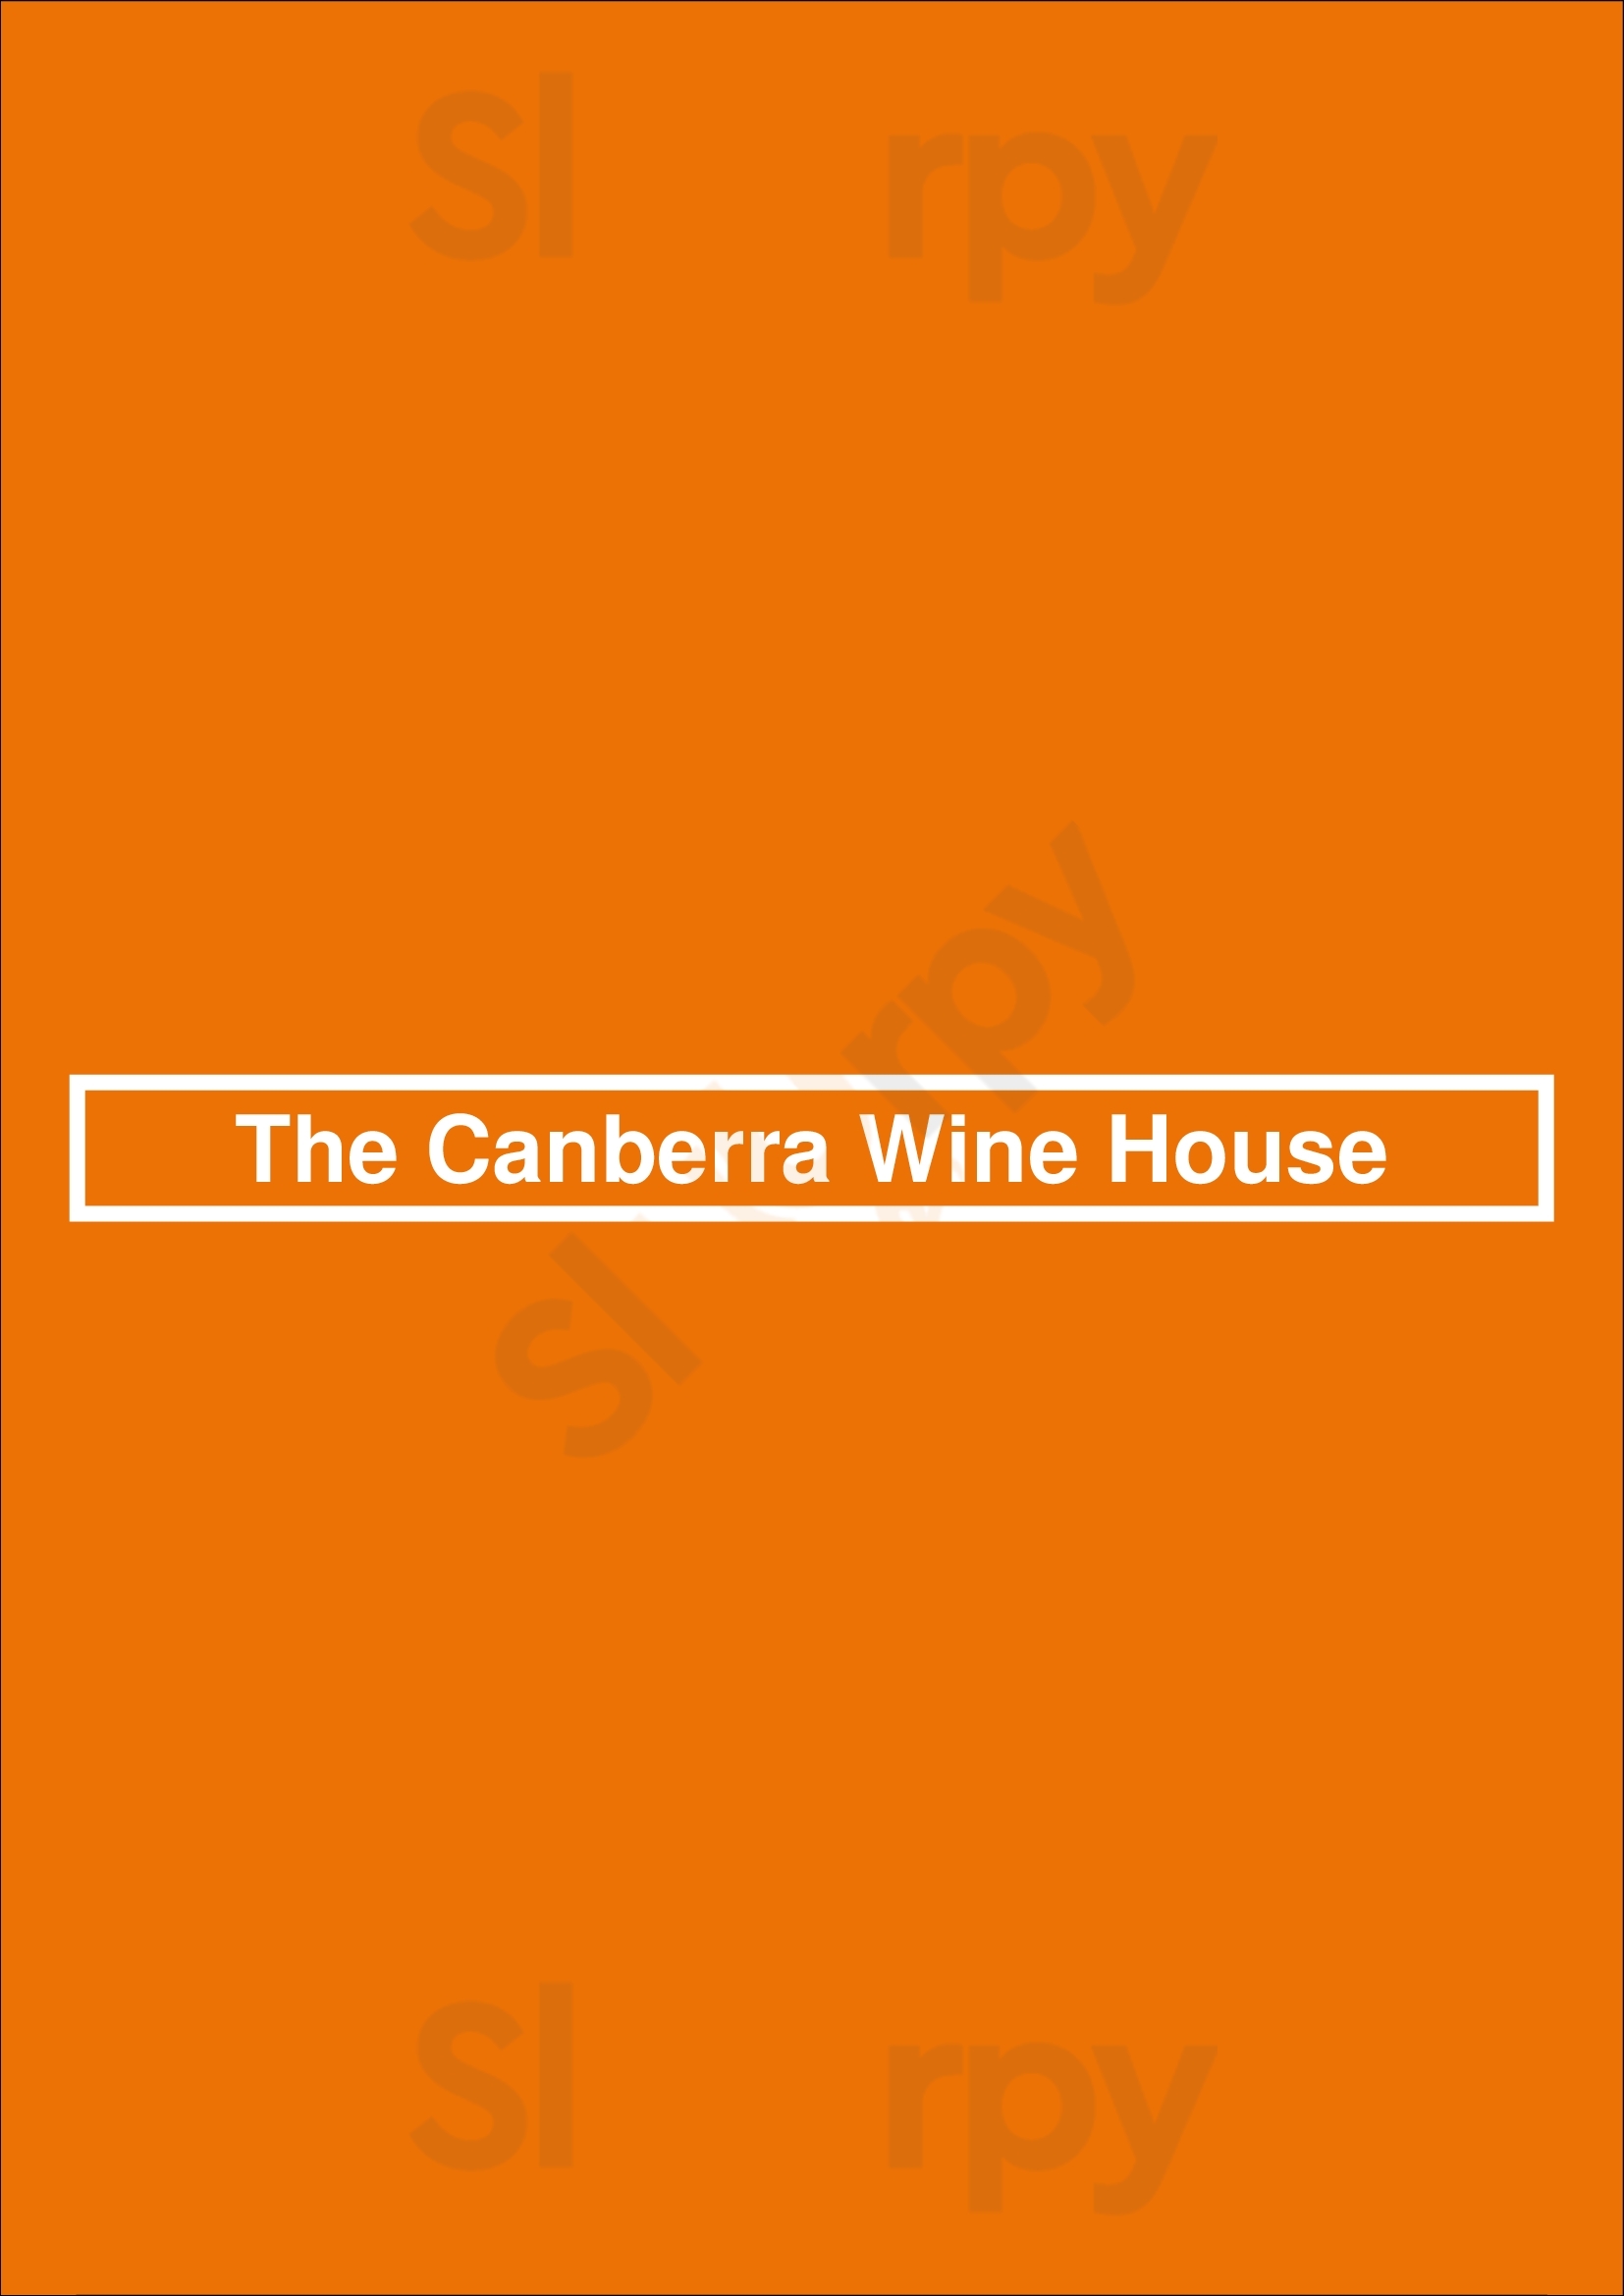 The Canberra Wine House Canberra Menu - 1